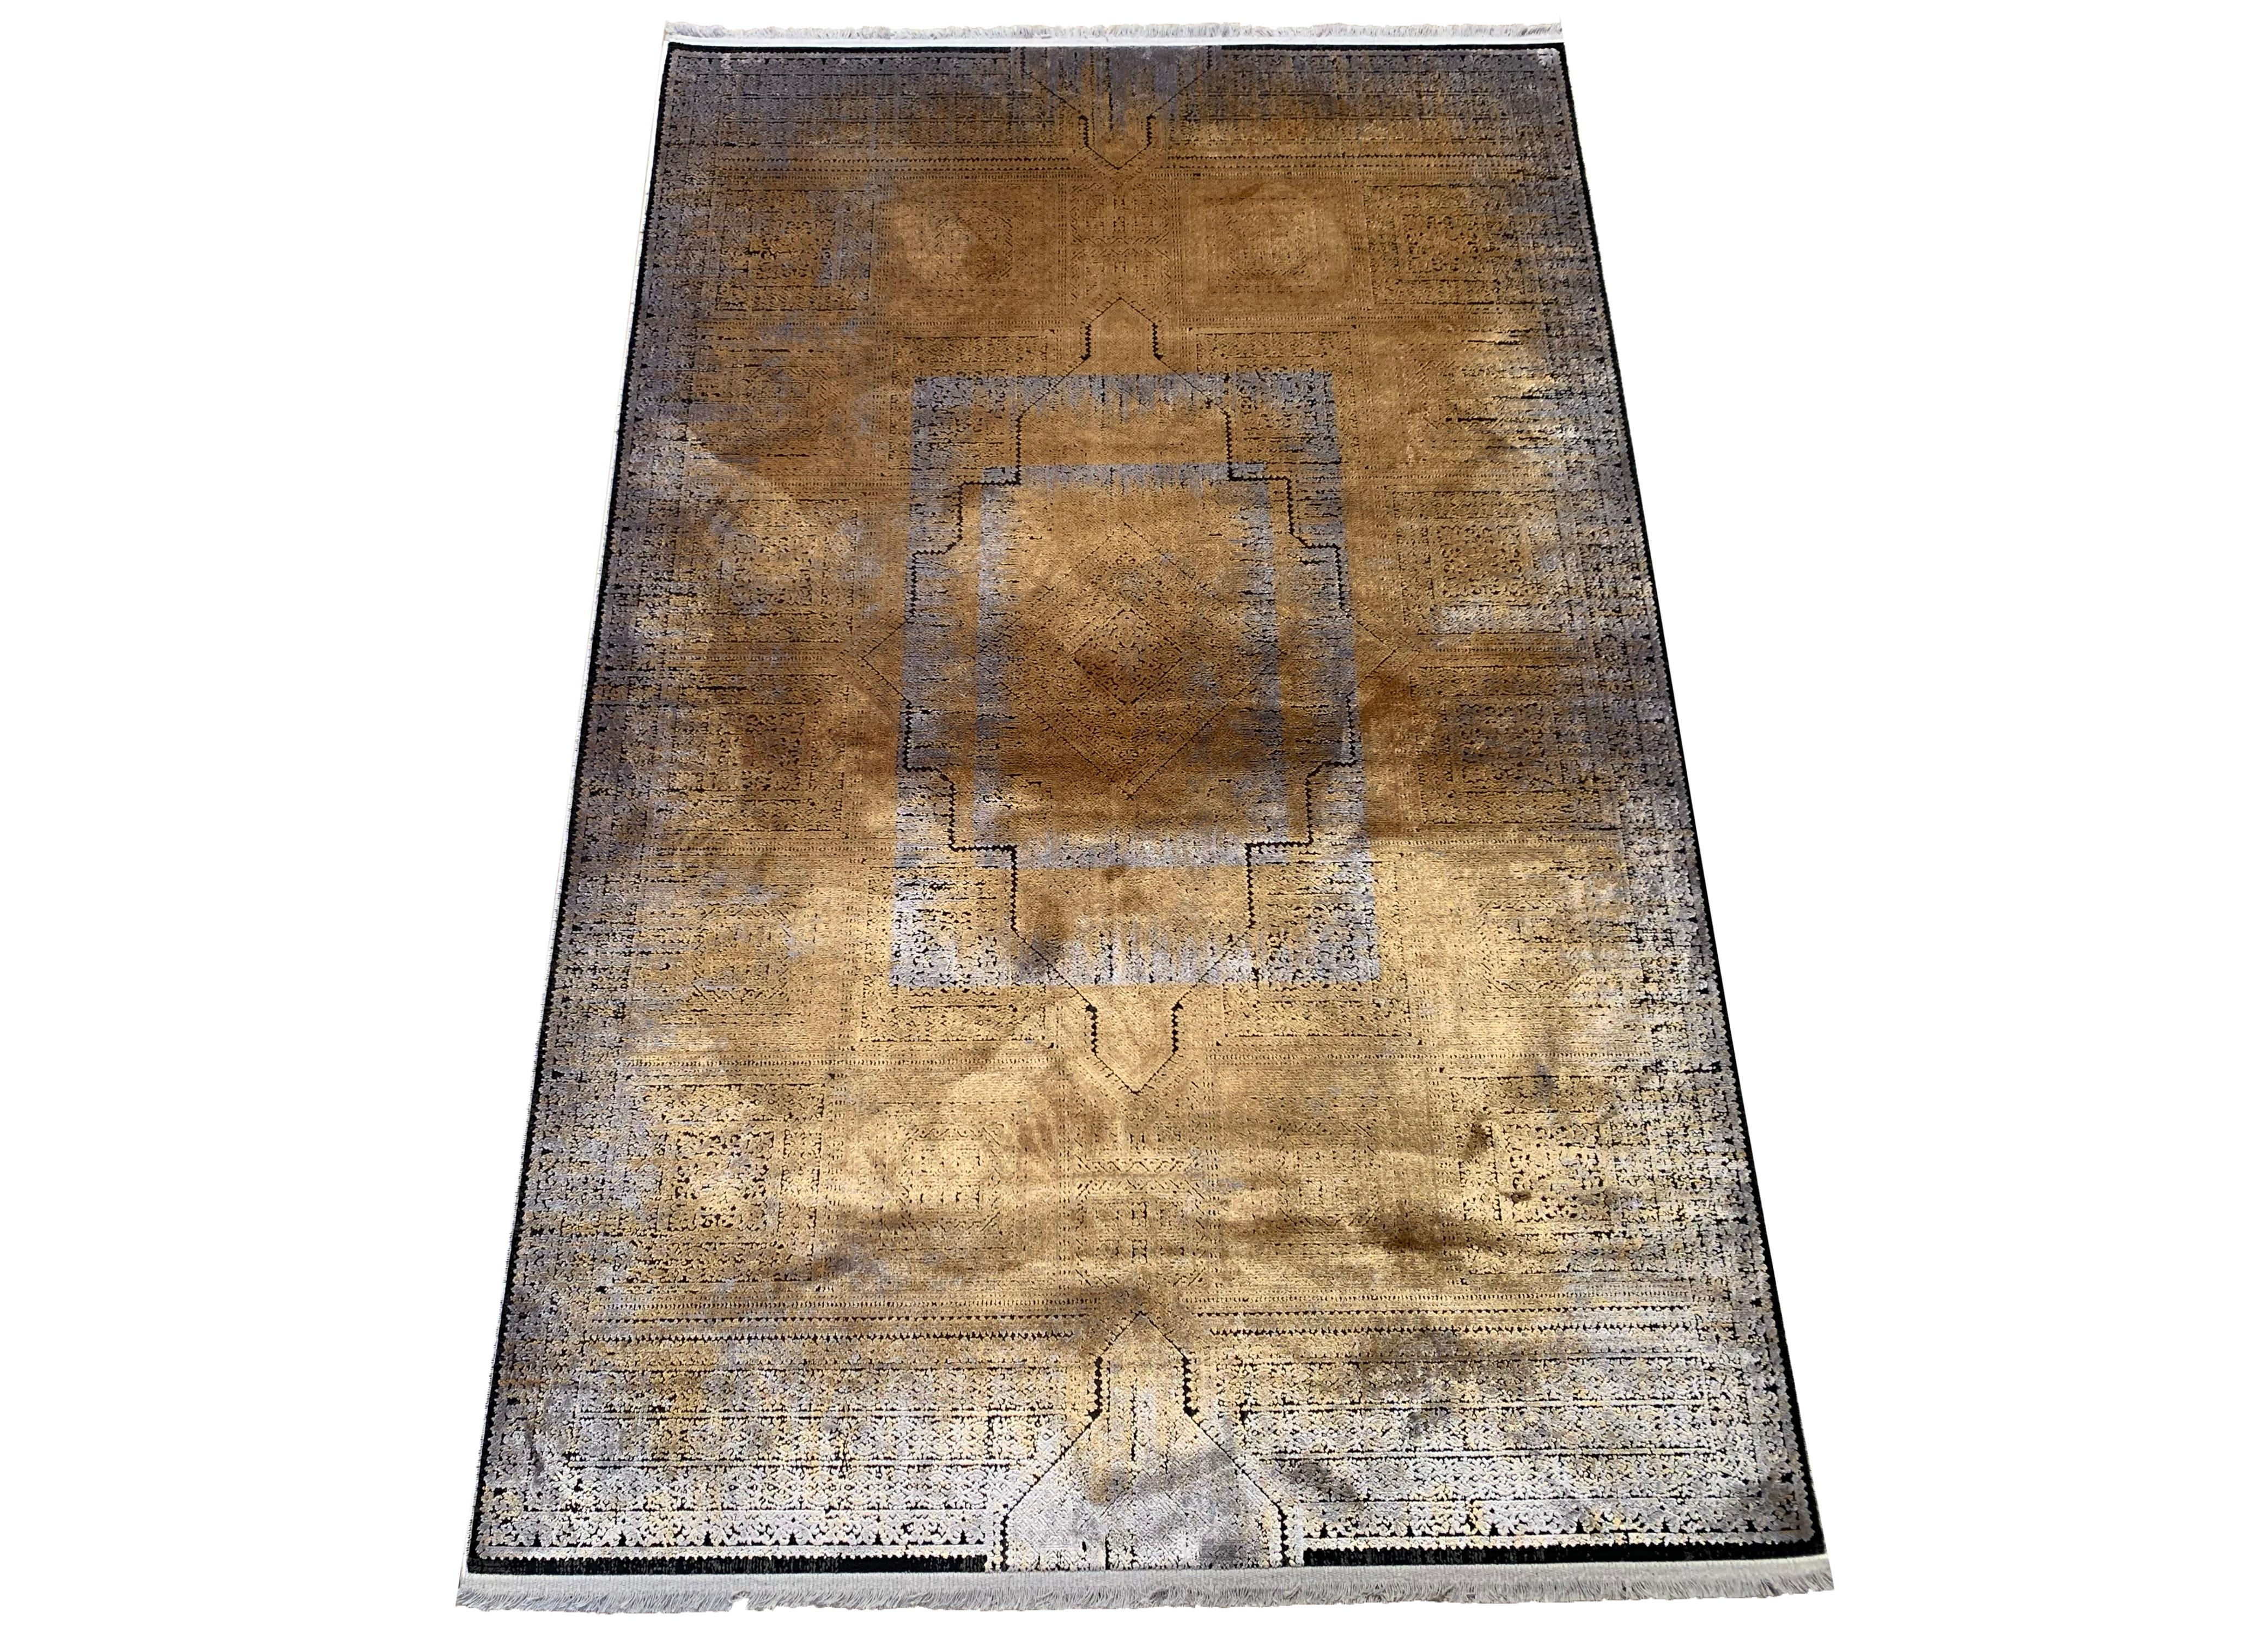 Tufted art silk pile on a art silk foundation. (1000 KPSI)

Oxidized

New

Dimensions: 3'10